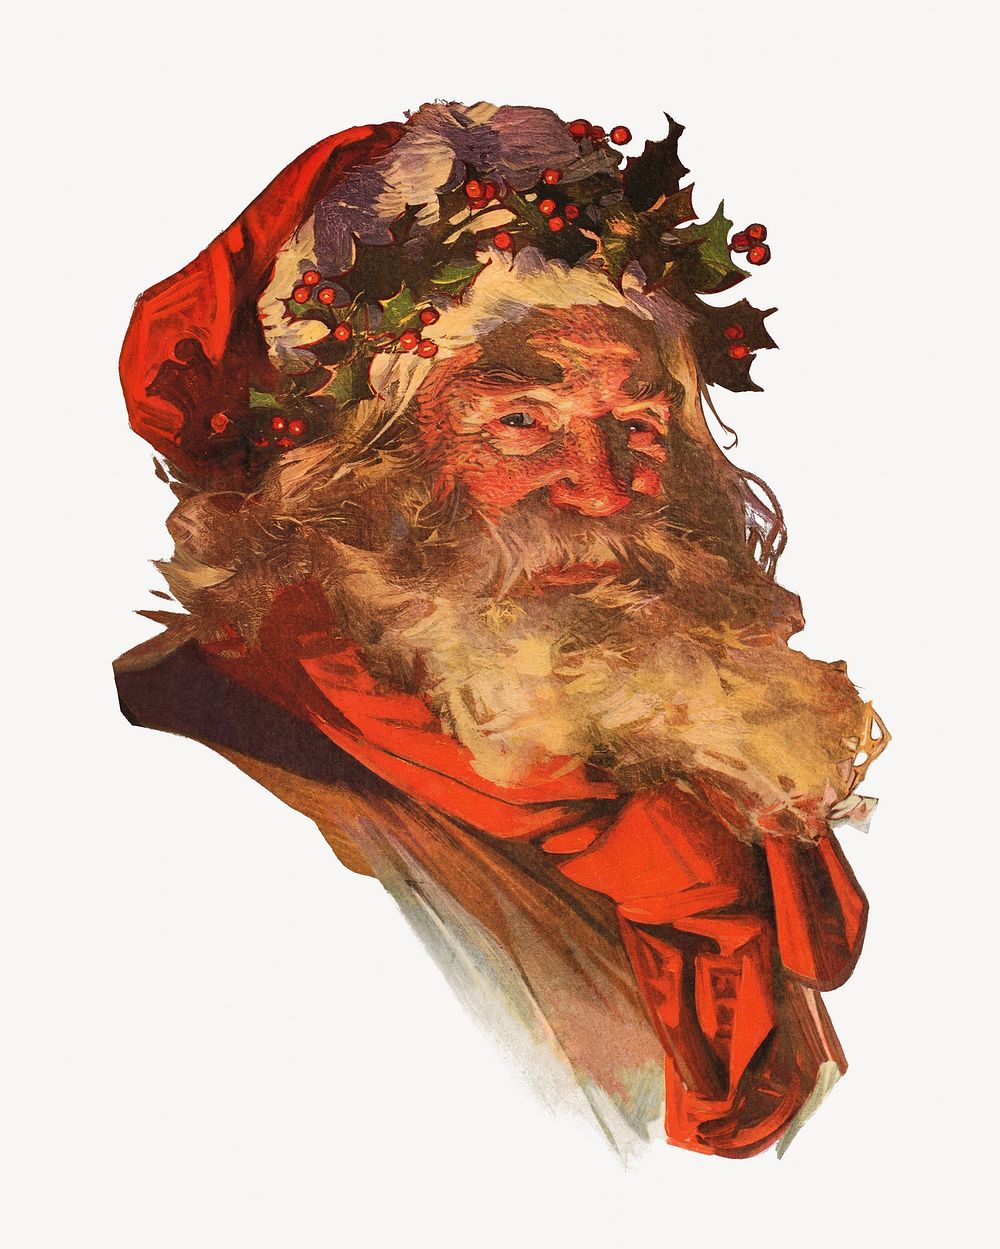 Santa Claus, vintage portrait illustration.   Remastered by rawpixel